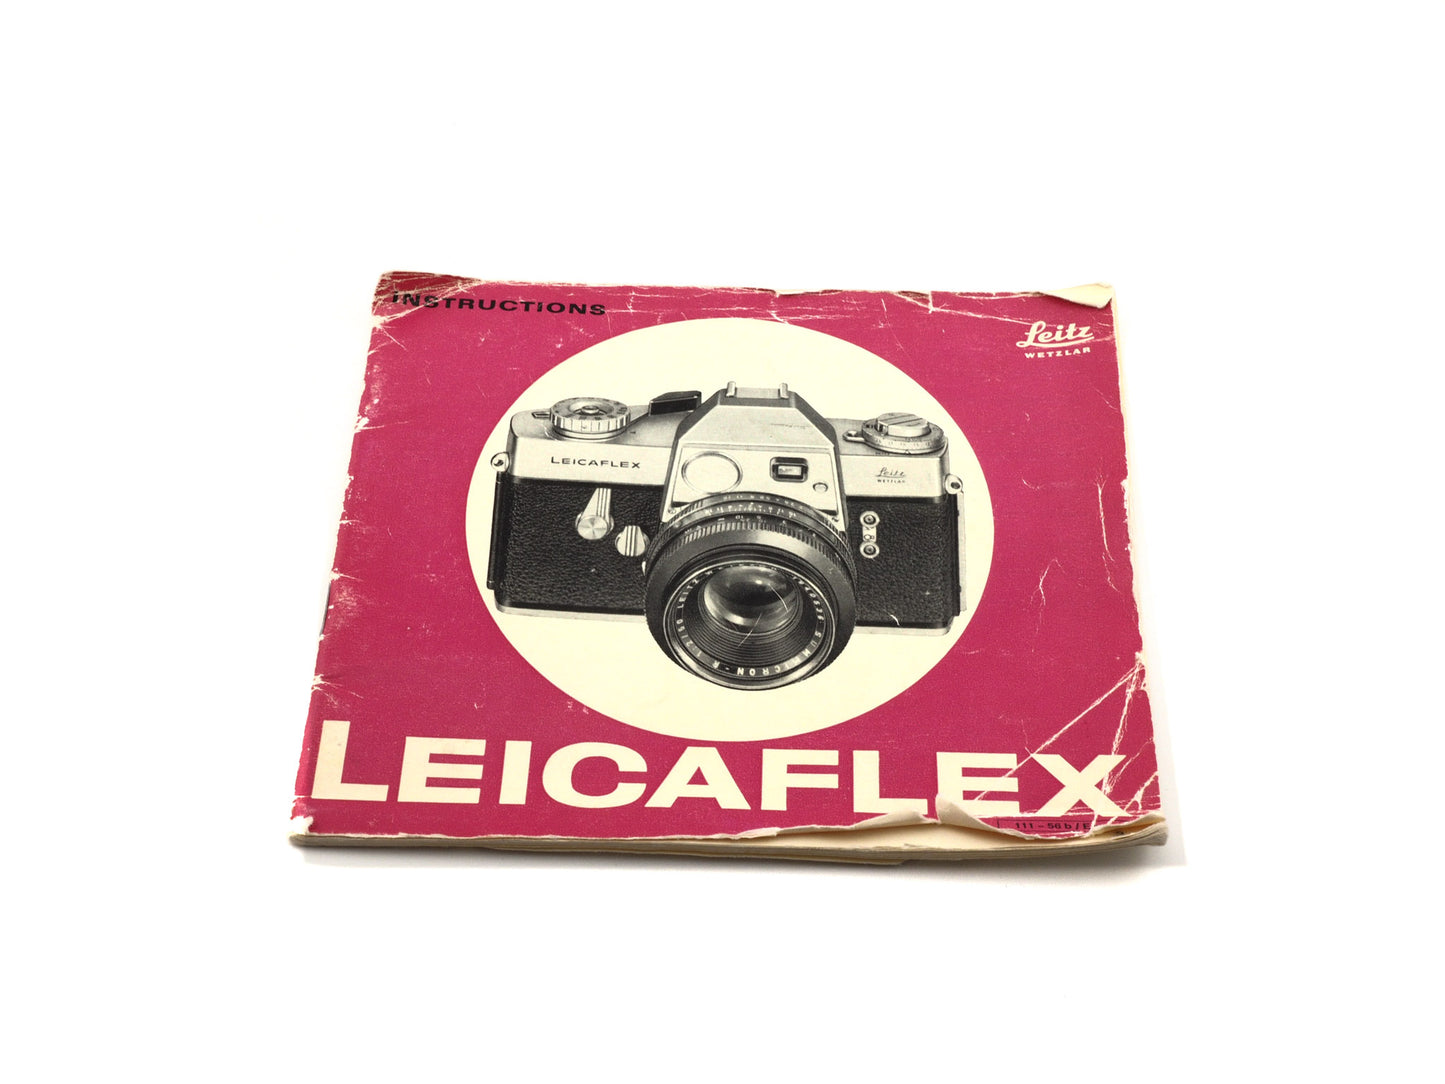 Leica Leicaflex Instructions - Accessory